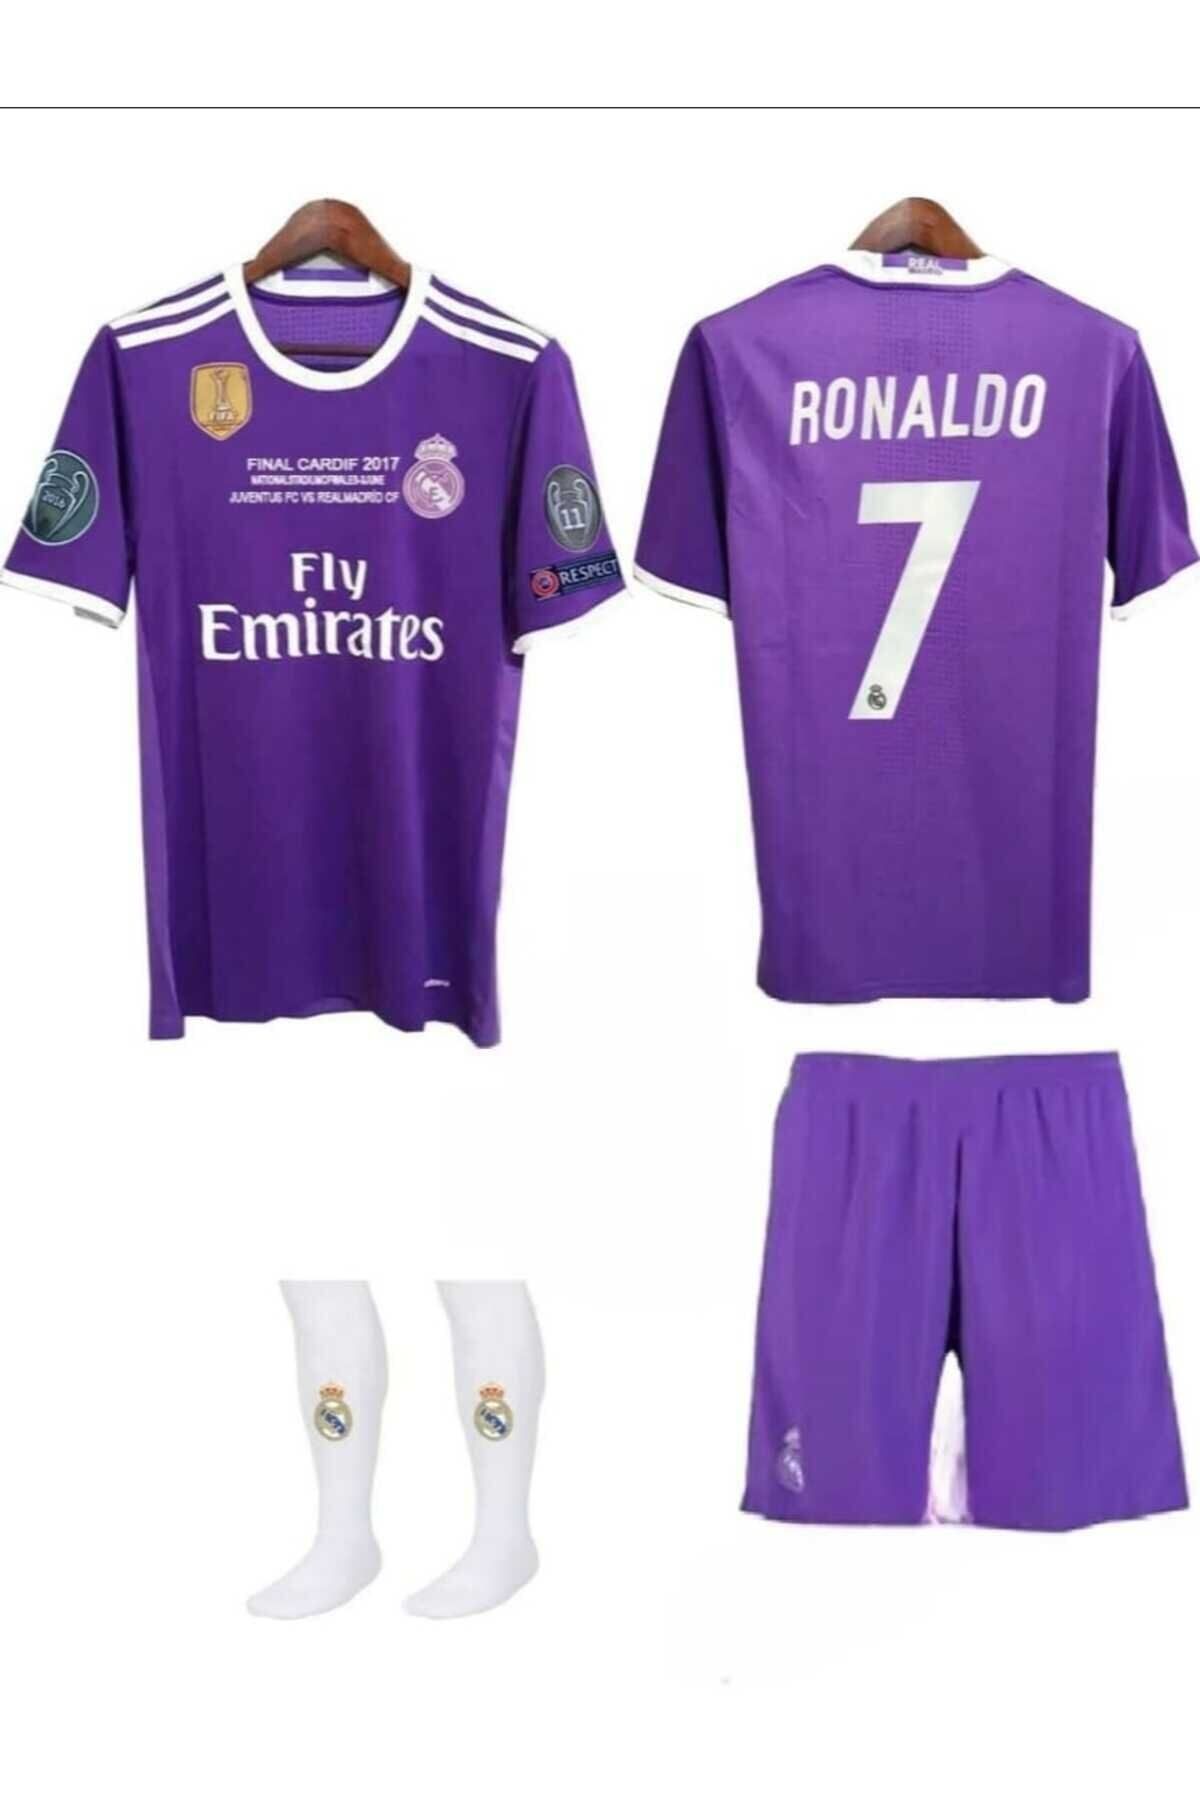 BYSPORTAKUS Real Madrid 2017 Cardiff Şampiyonlar Ligi Cristiano Ronaldo Çocuk Forması Seti